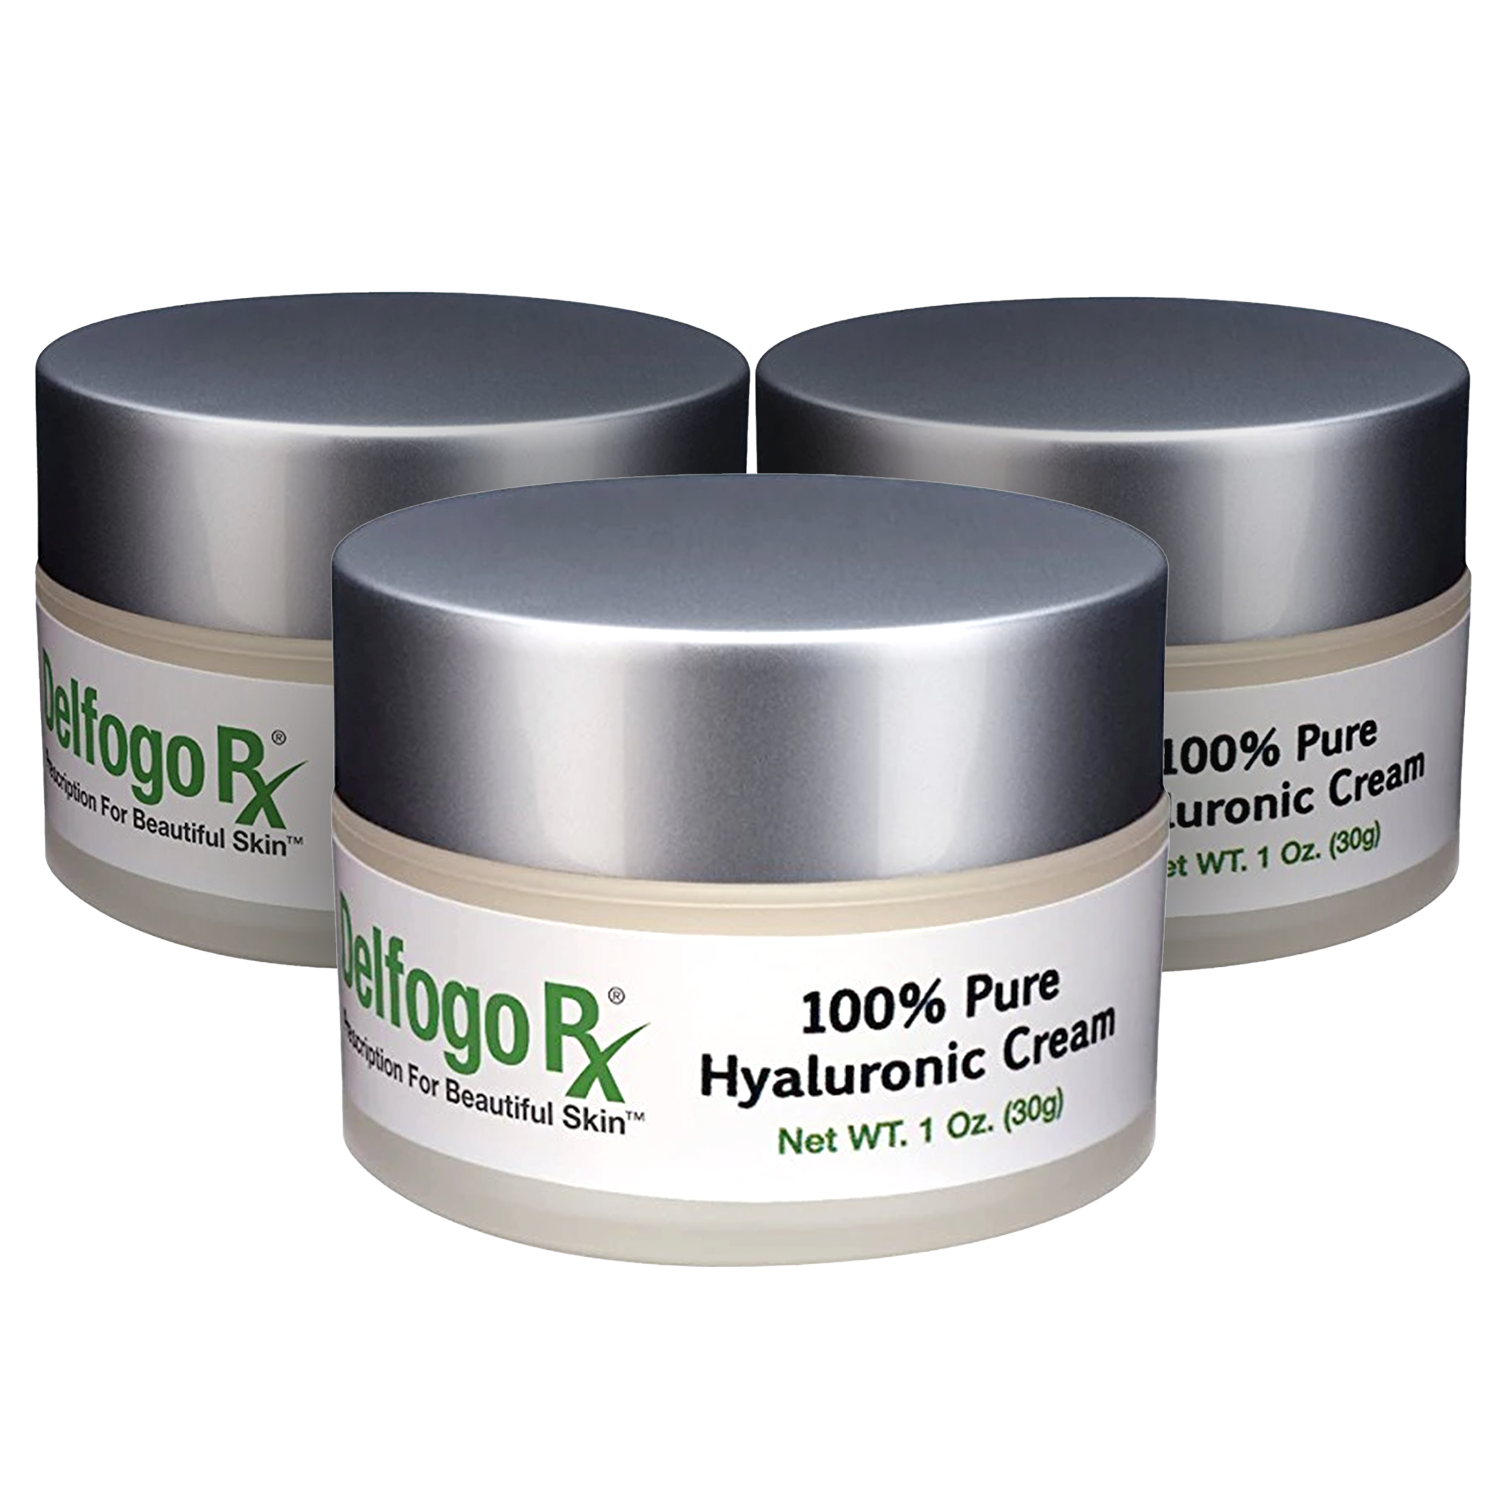 Delfogo Rx 100% Pure Hyaluronic Acid Cream